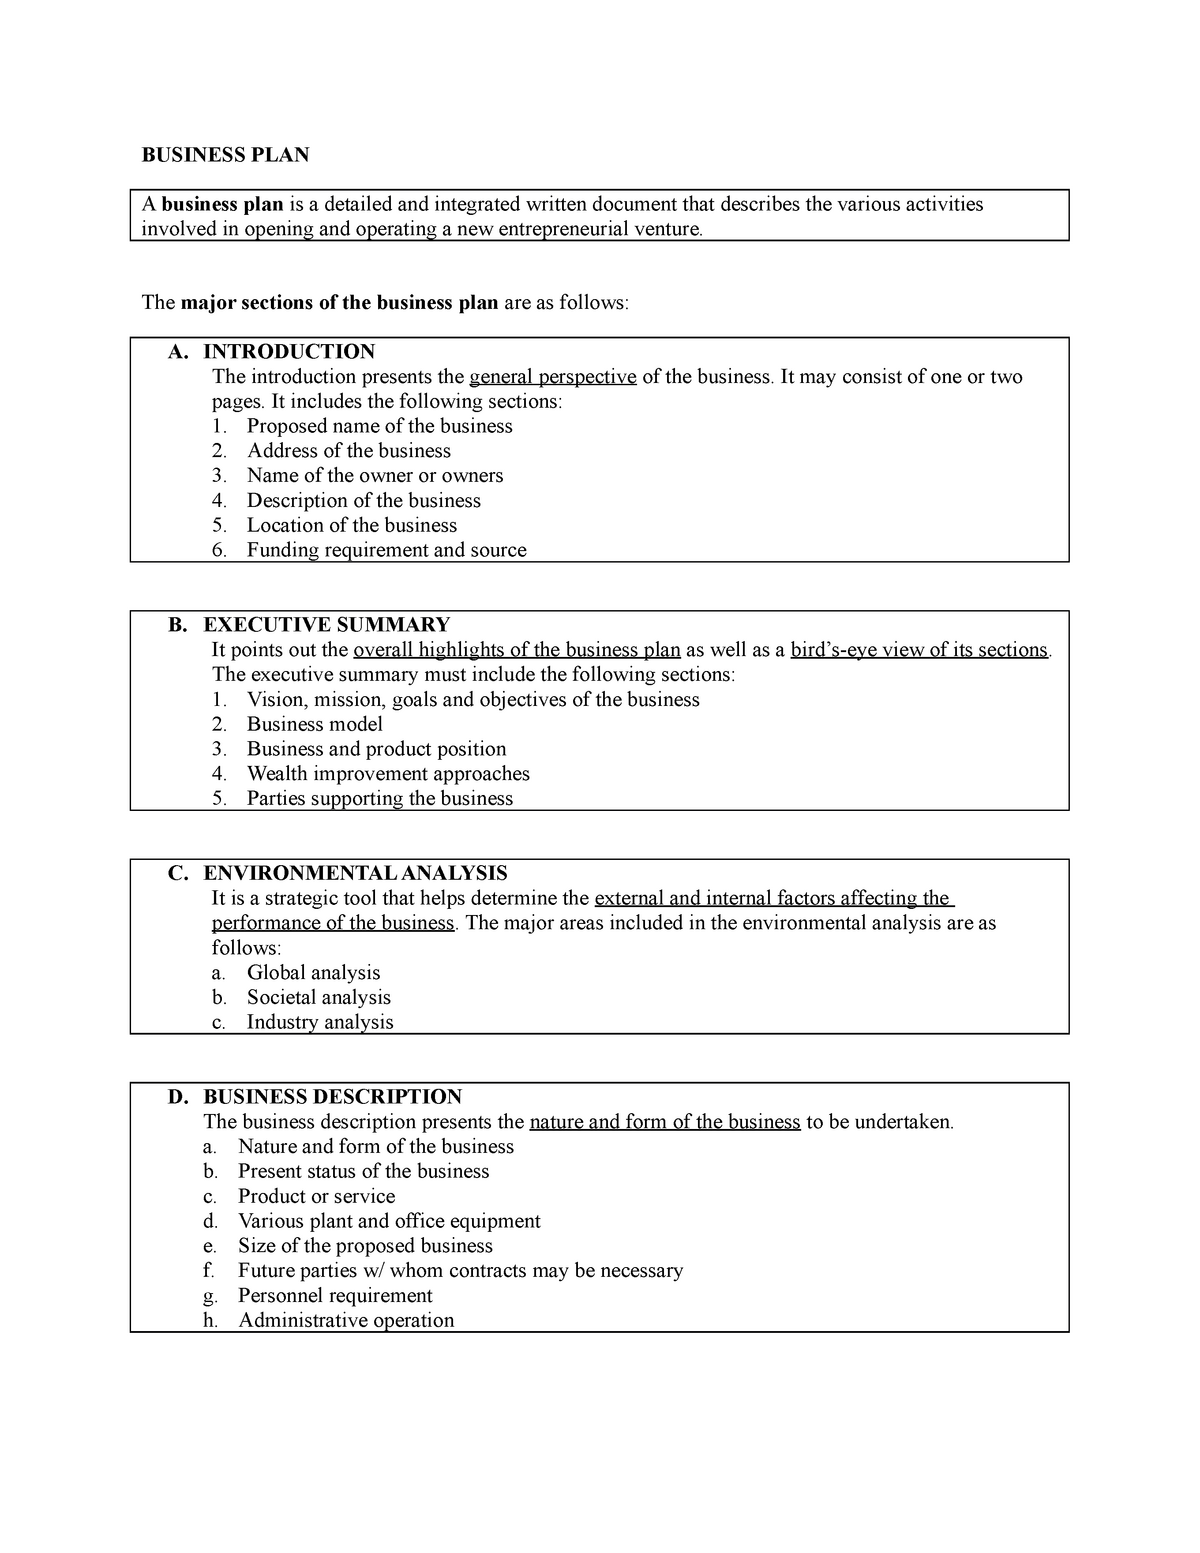 business plan pdf notes